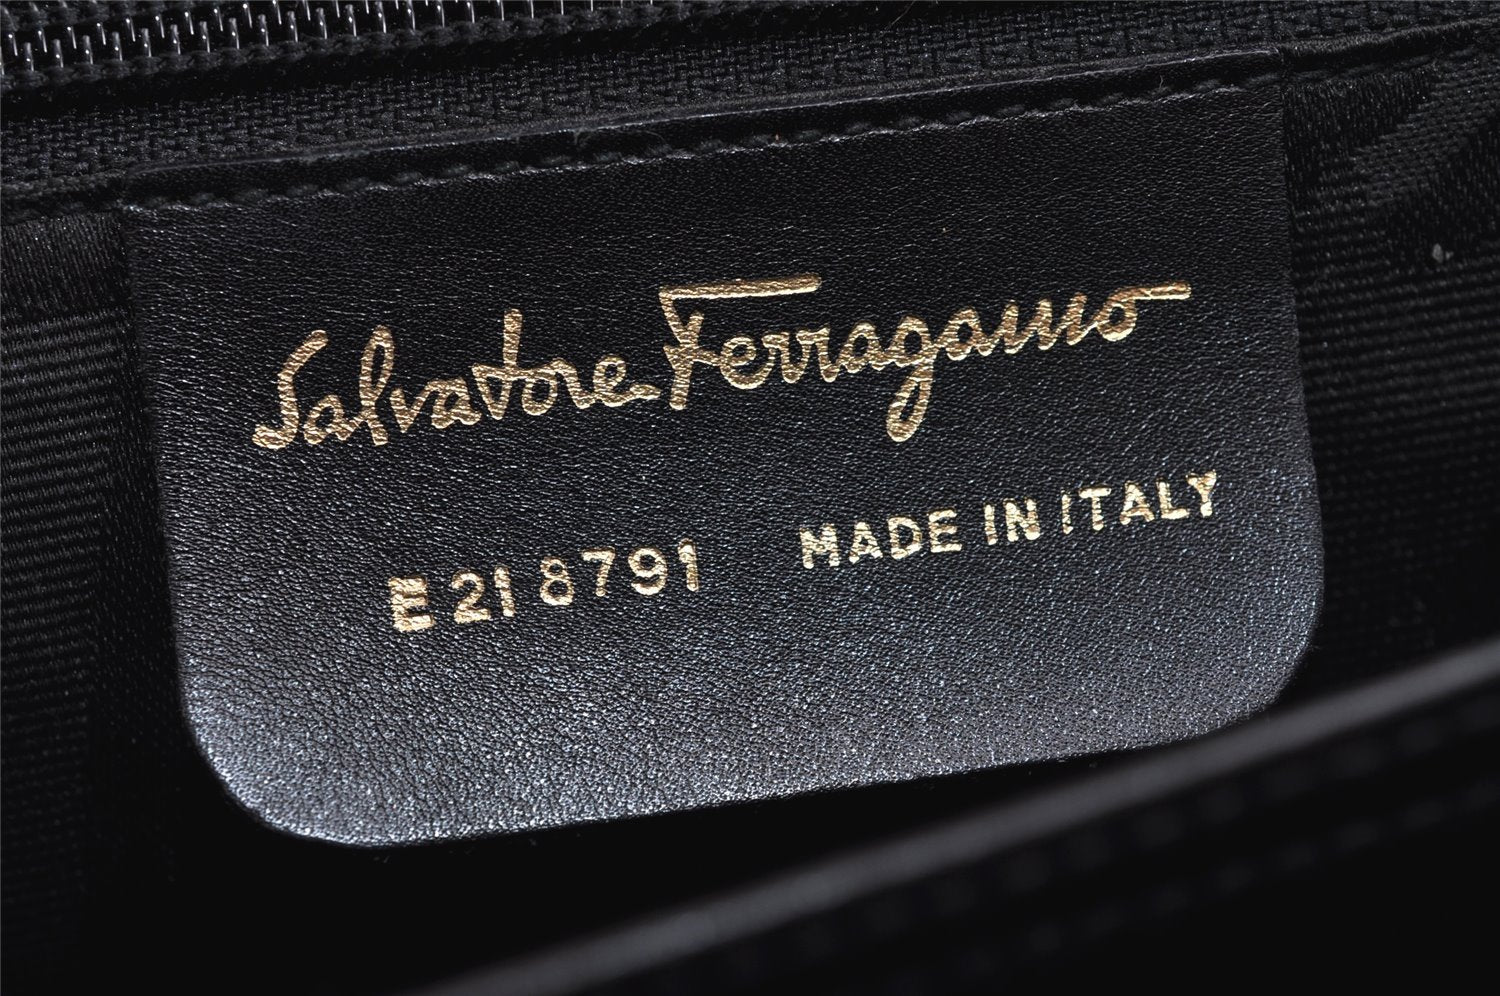 Authentic Salvatore Ferragamo Gancini Leather 2Way Shoulder Hand Bag Black 4893J